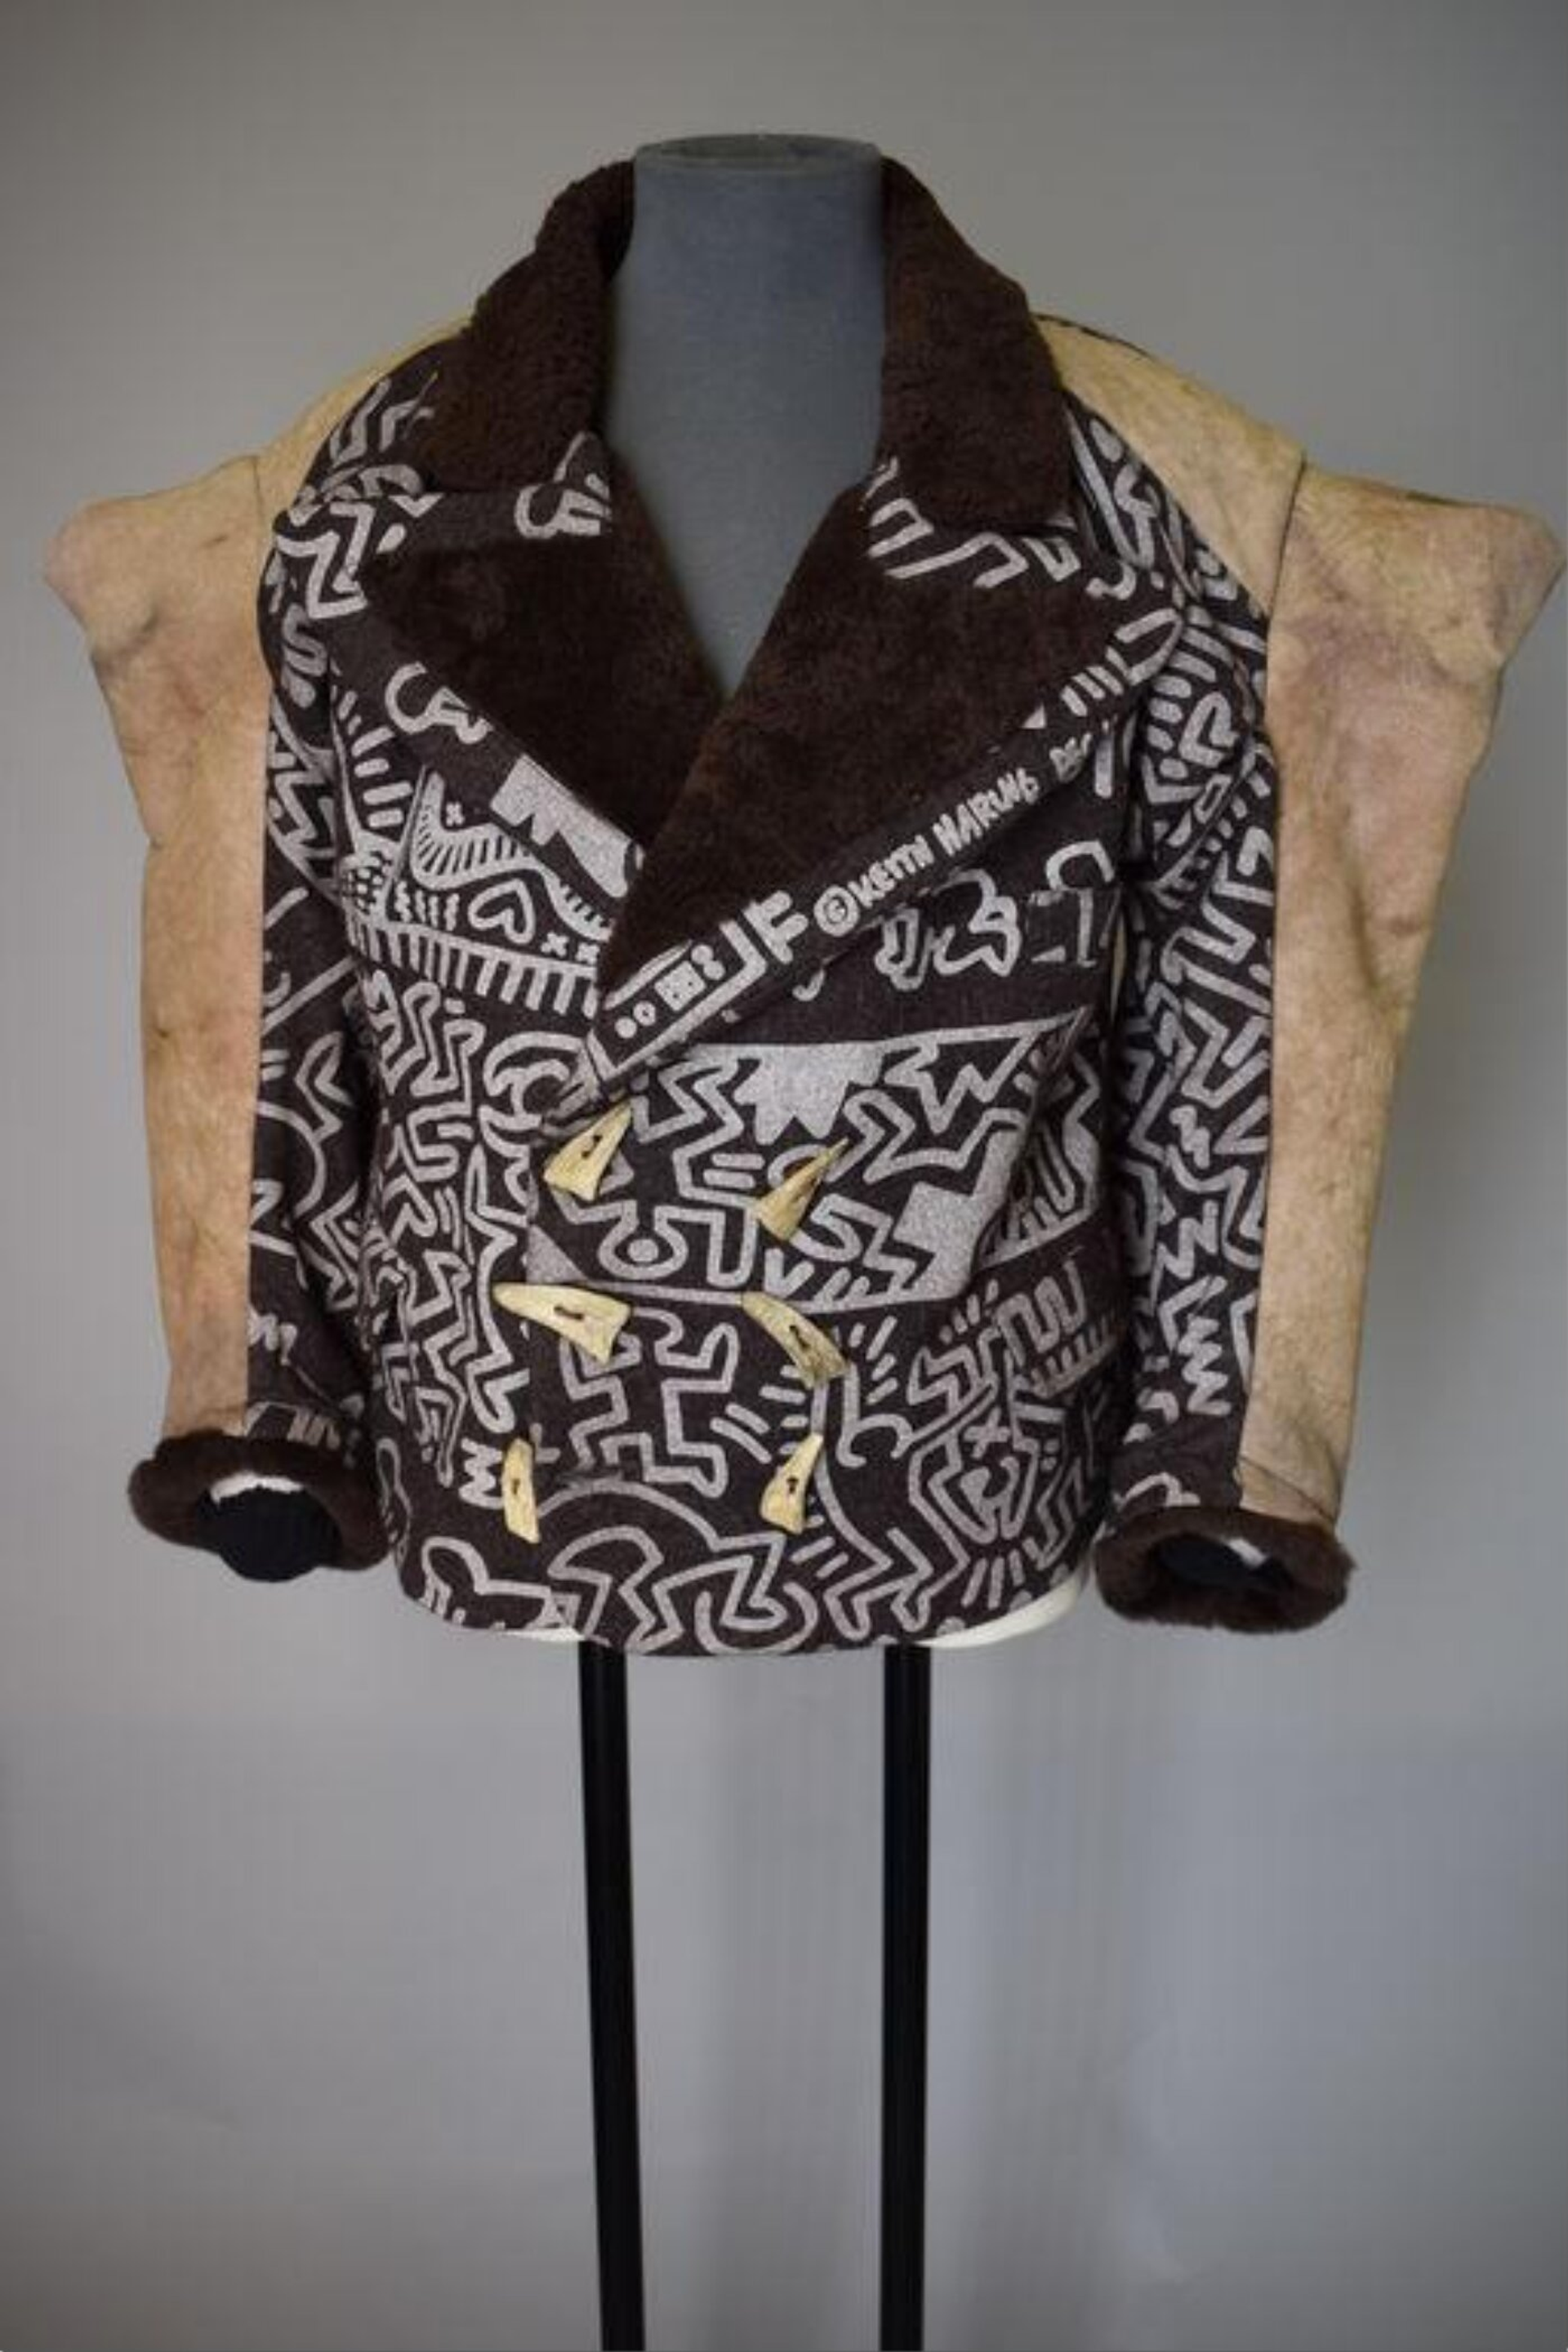 Man's jacket made of printed sheepskin, print designed by Keith Haring, jacket designed by Vivienne Westwood.